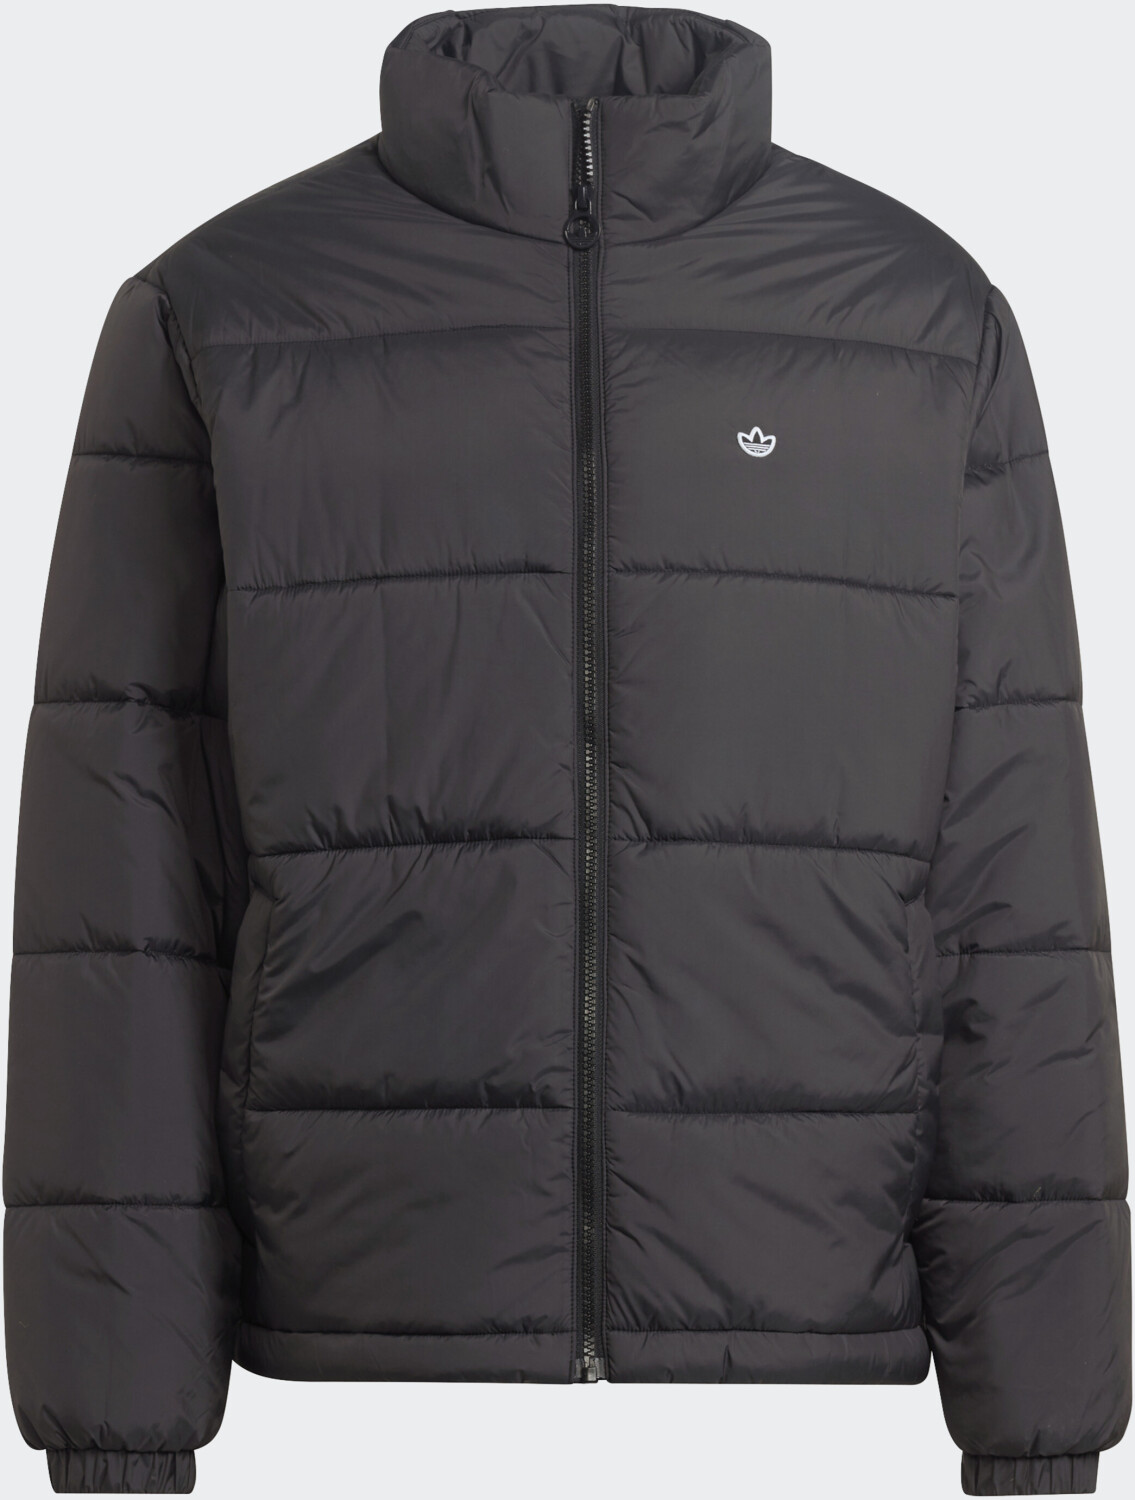 Preisvergleich | 87,99 € black (H13551) Jacket bei Adidas ab Puffer Padded Stand-Up Originals Collar